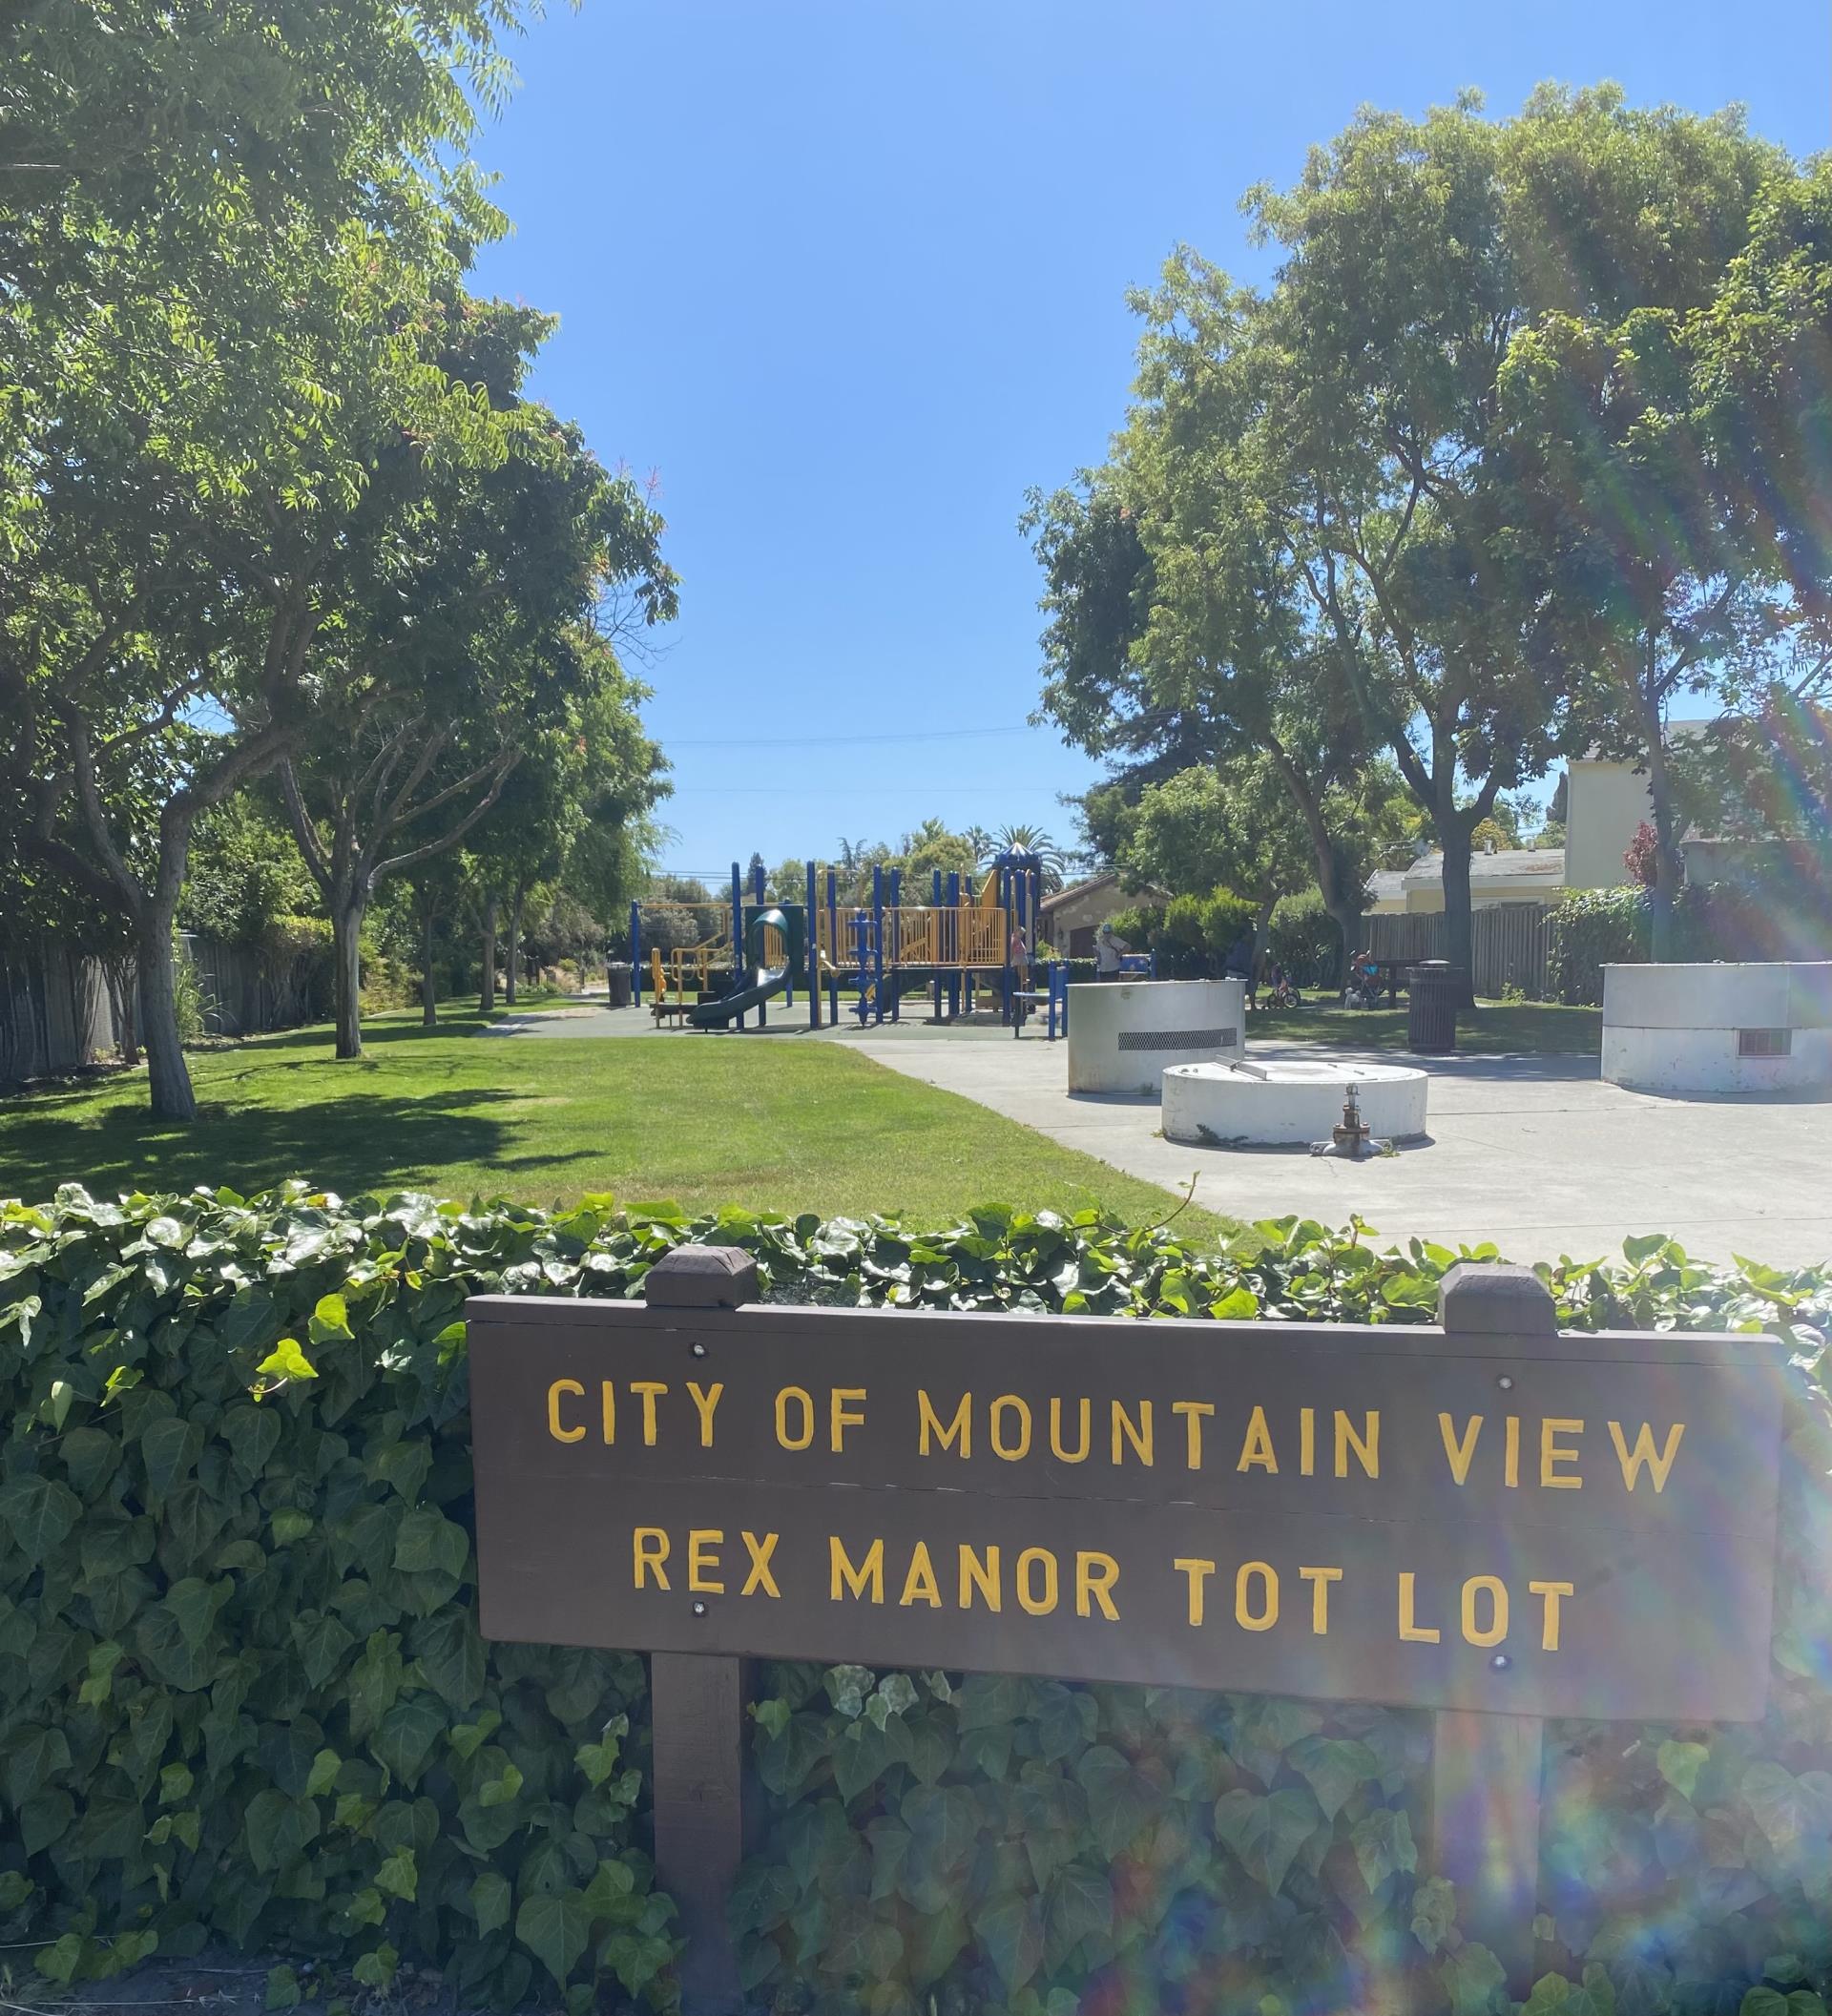 Rex Manor